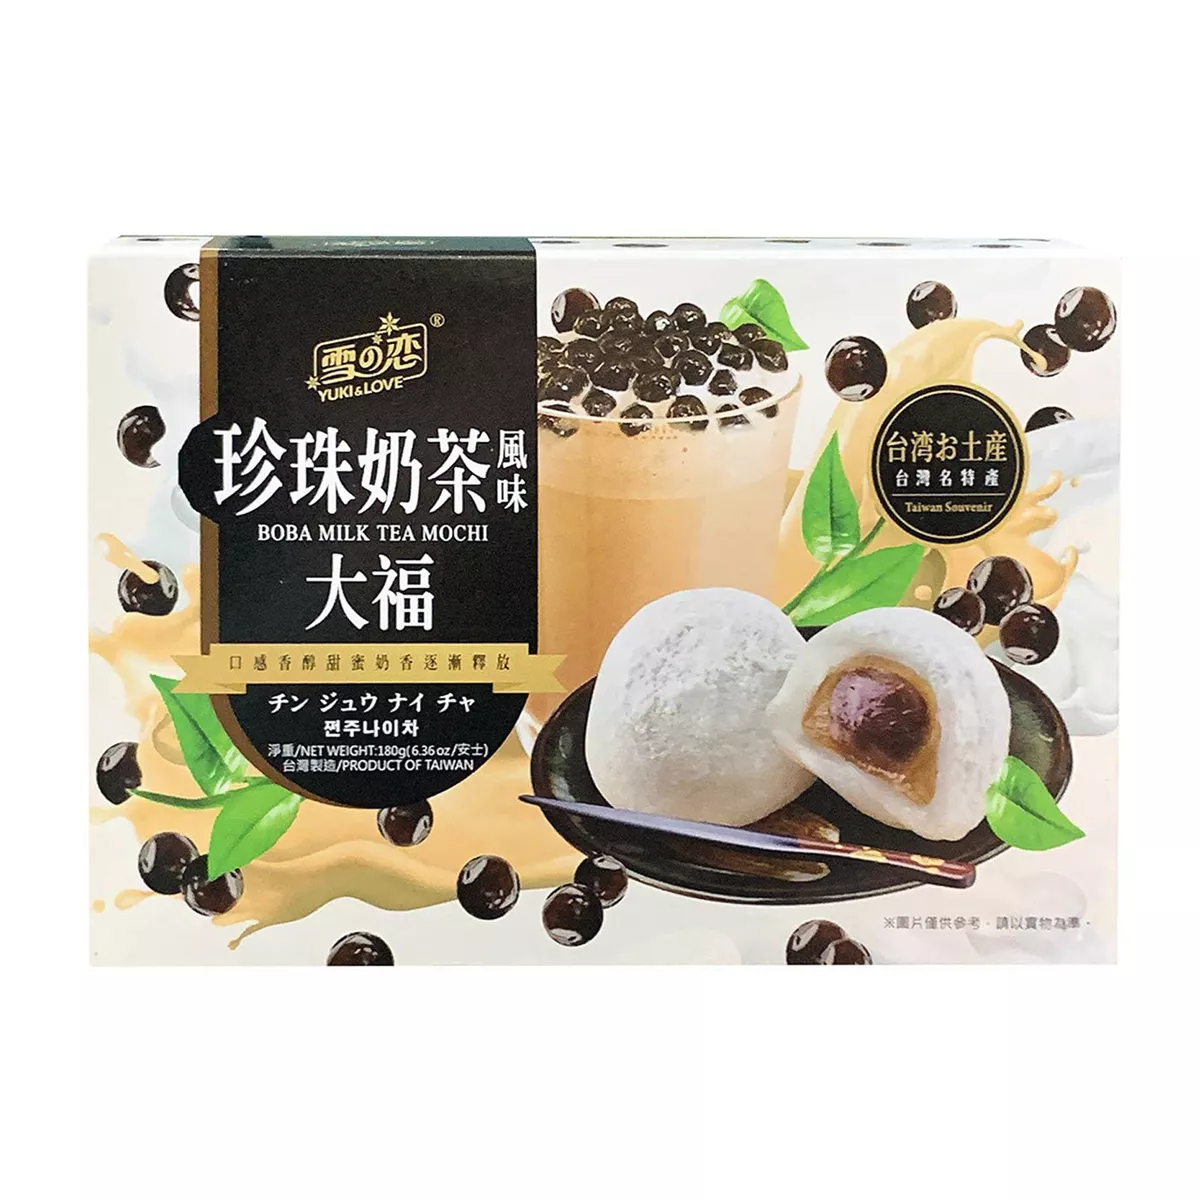 Mochi boba milk tea Y&L 180g, [],asianfood.ro